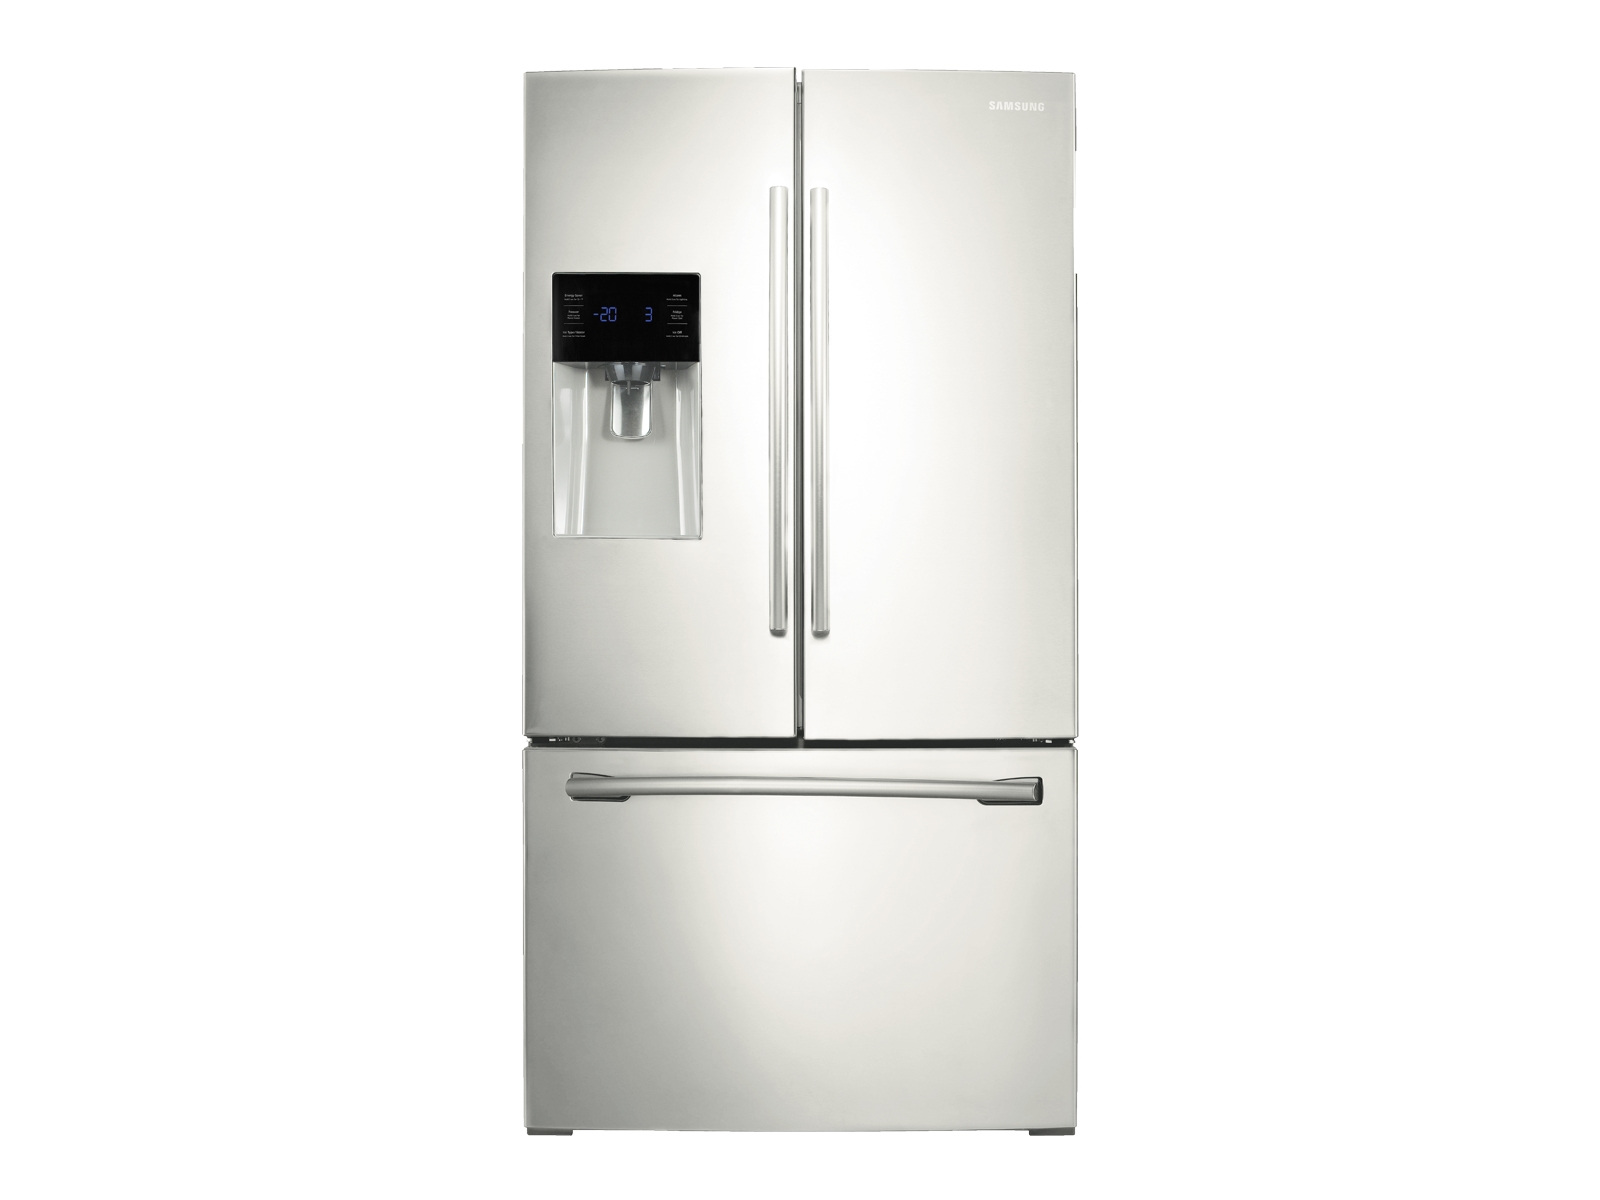 Refrigerator ice maker Appliances at